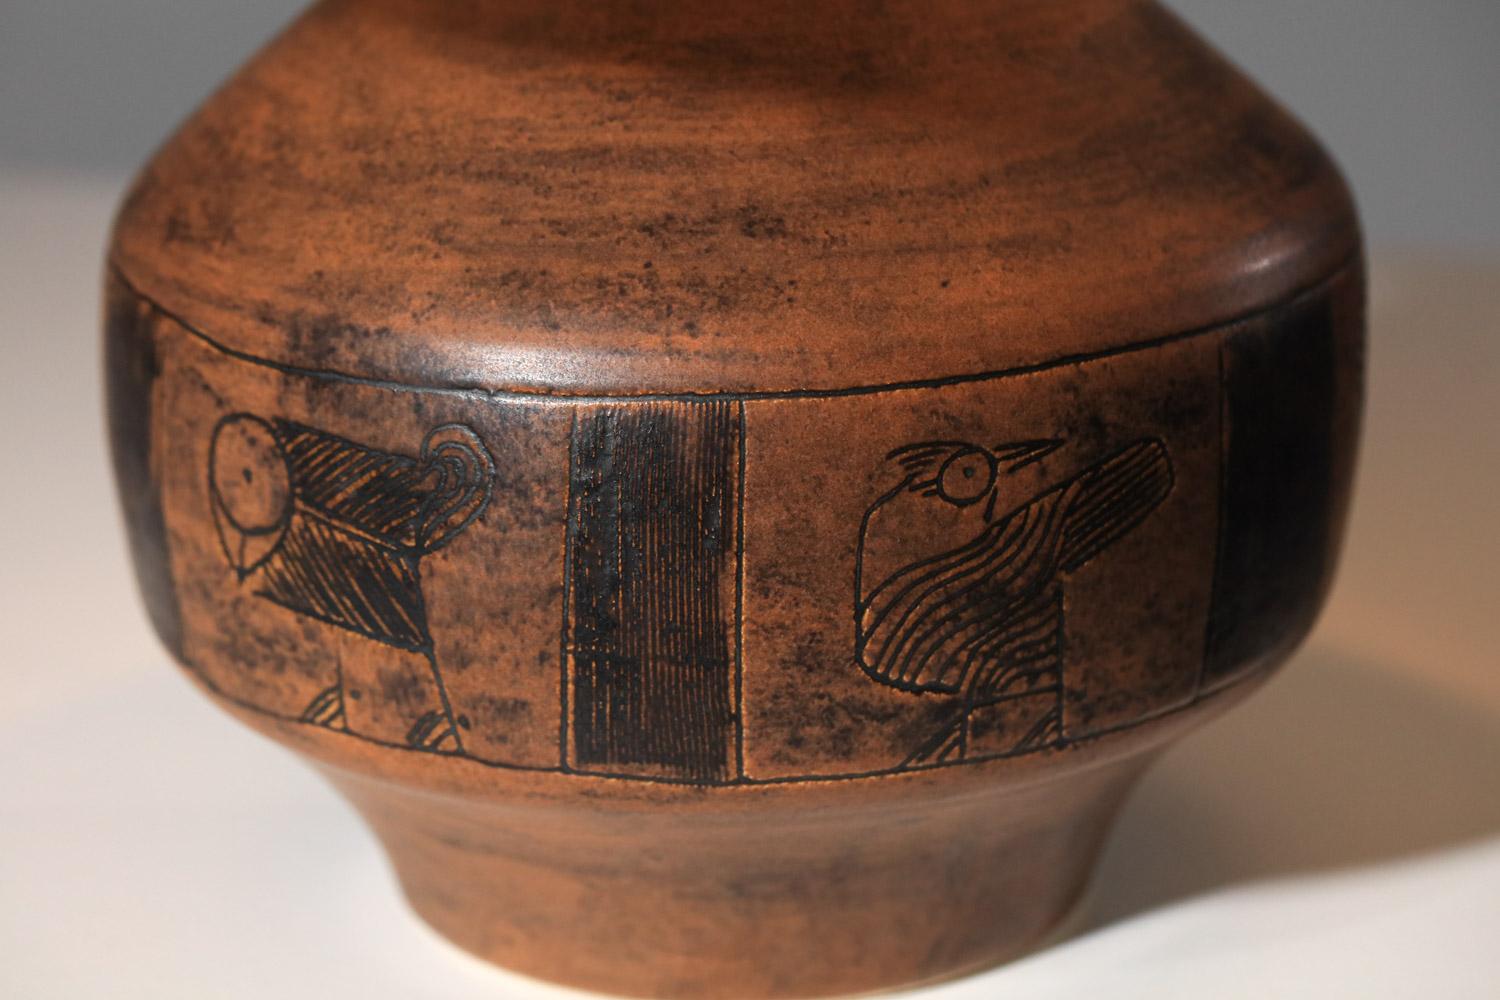 Jacques blin brown ceramic lamp with bird design   1